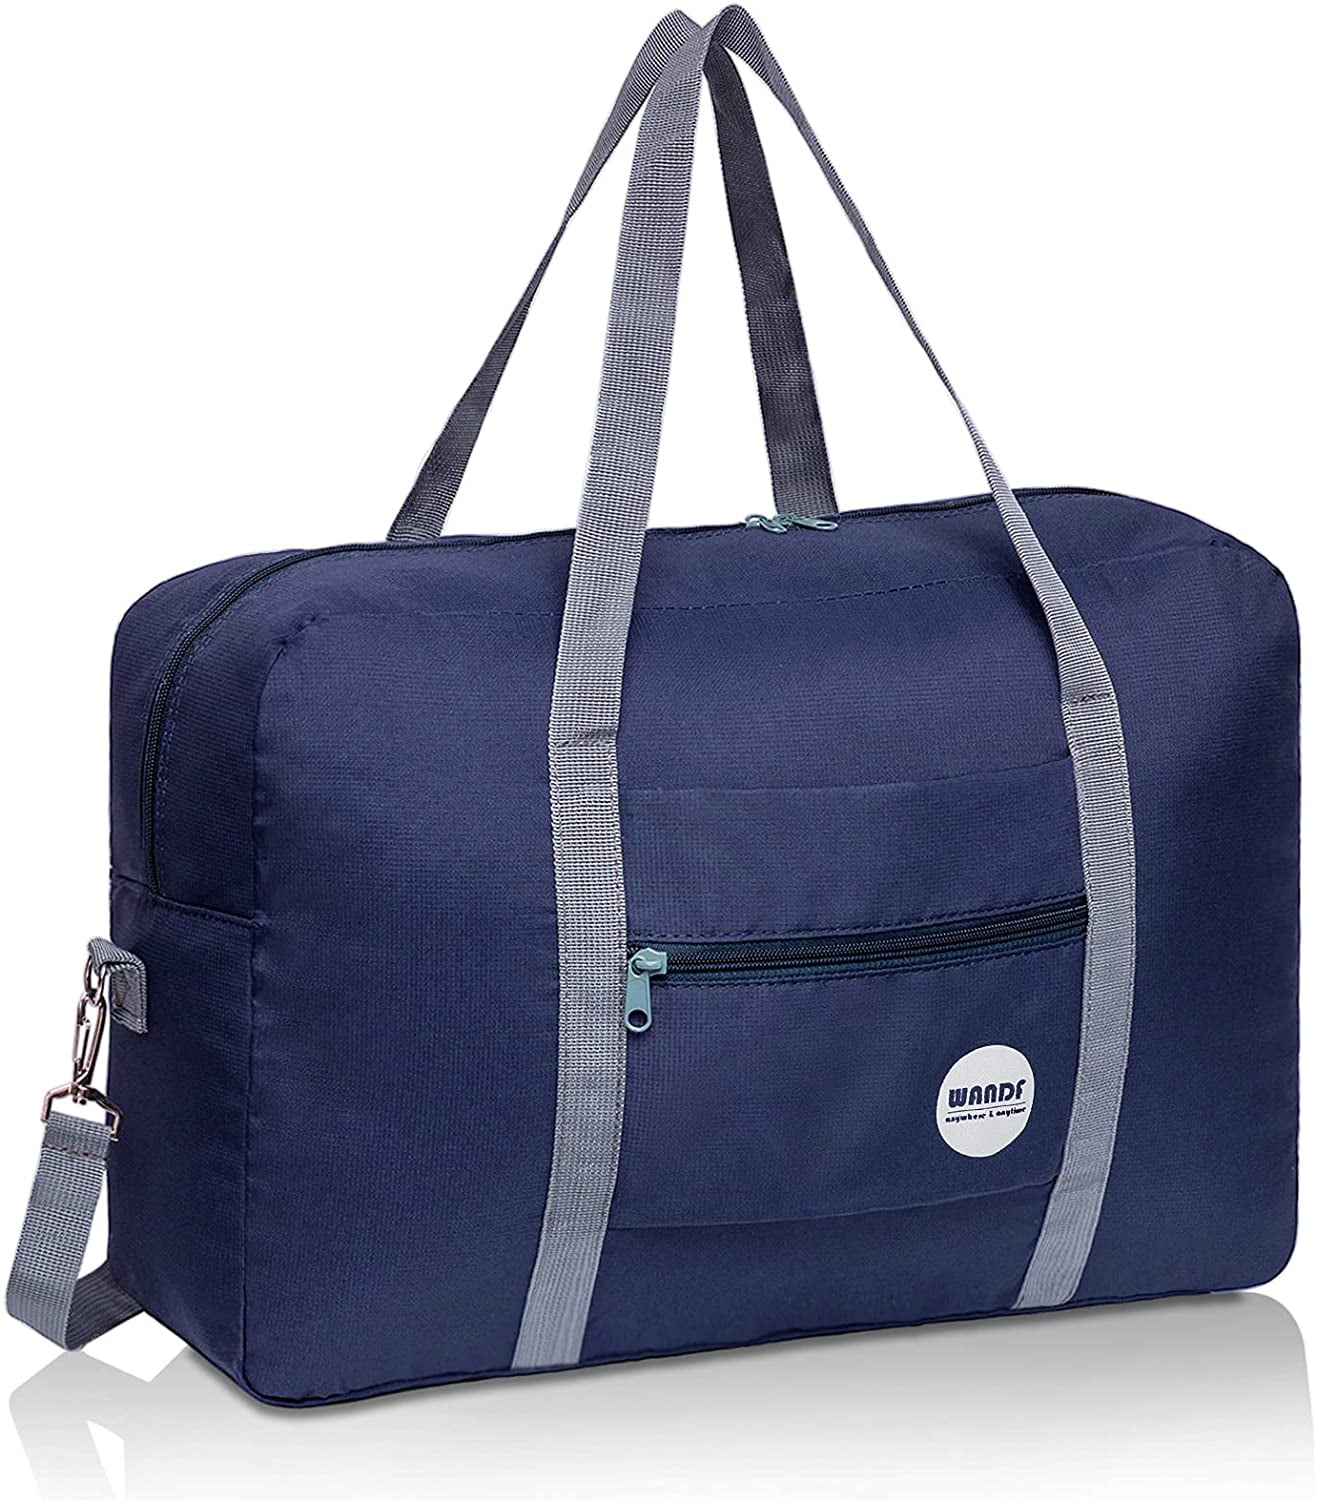 For Spirit Airlines Personal Item Bag 18x14x8 Travel Duffel Bag ...